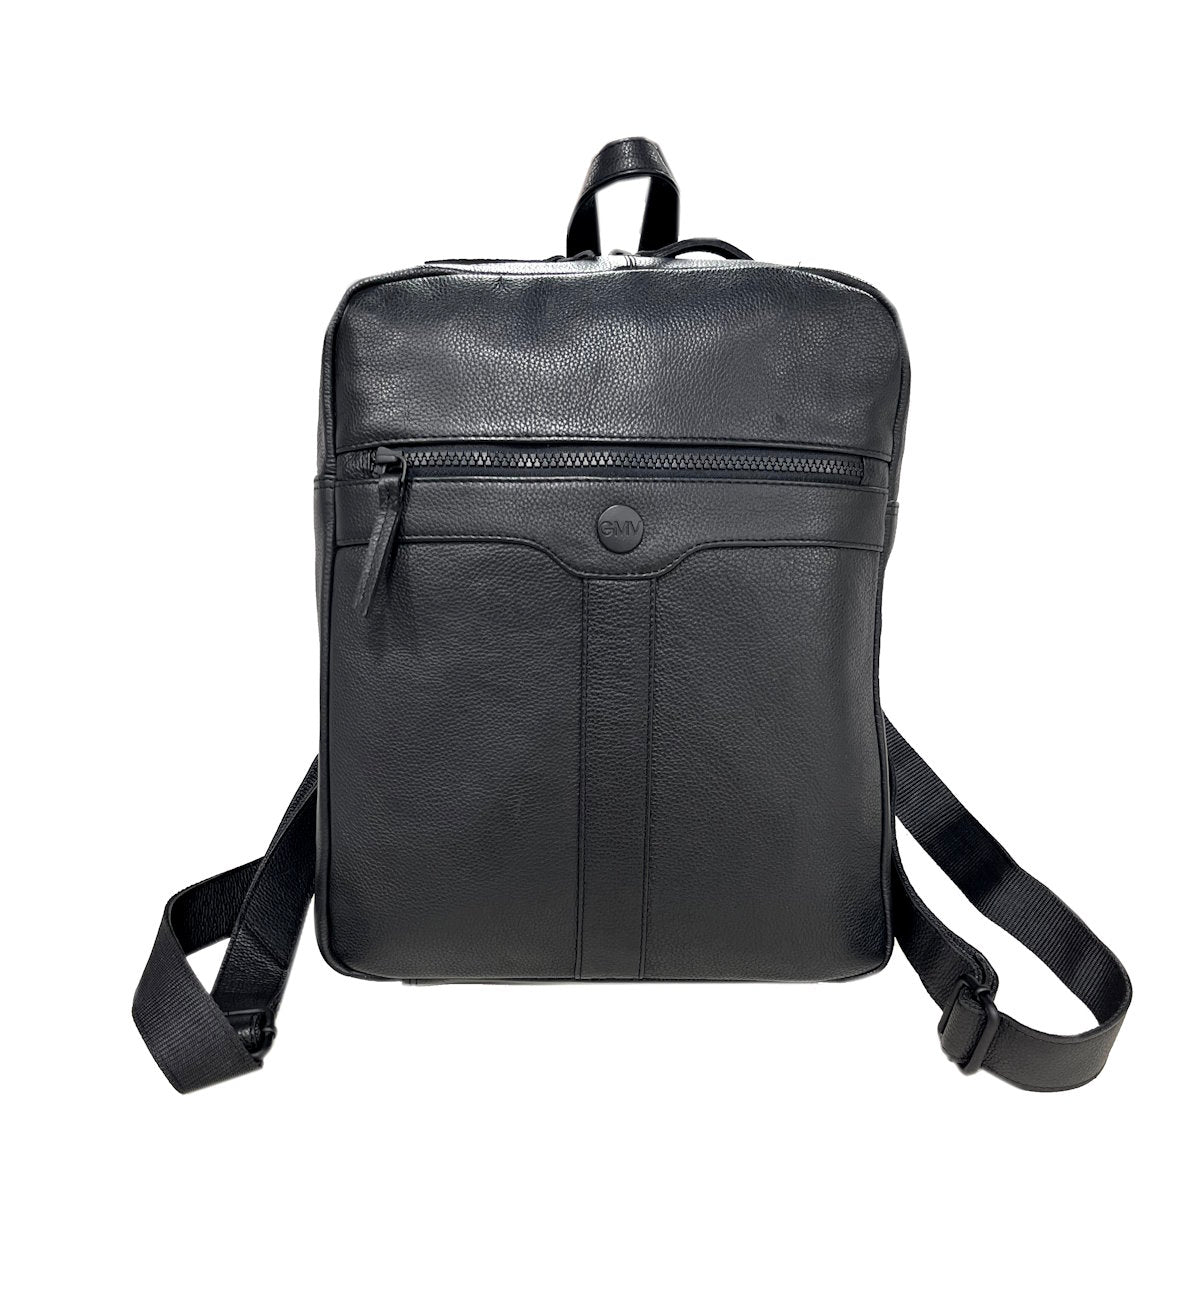 Genuine leather backpack for men, Brand GMV, art. GMV1470